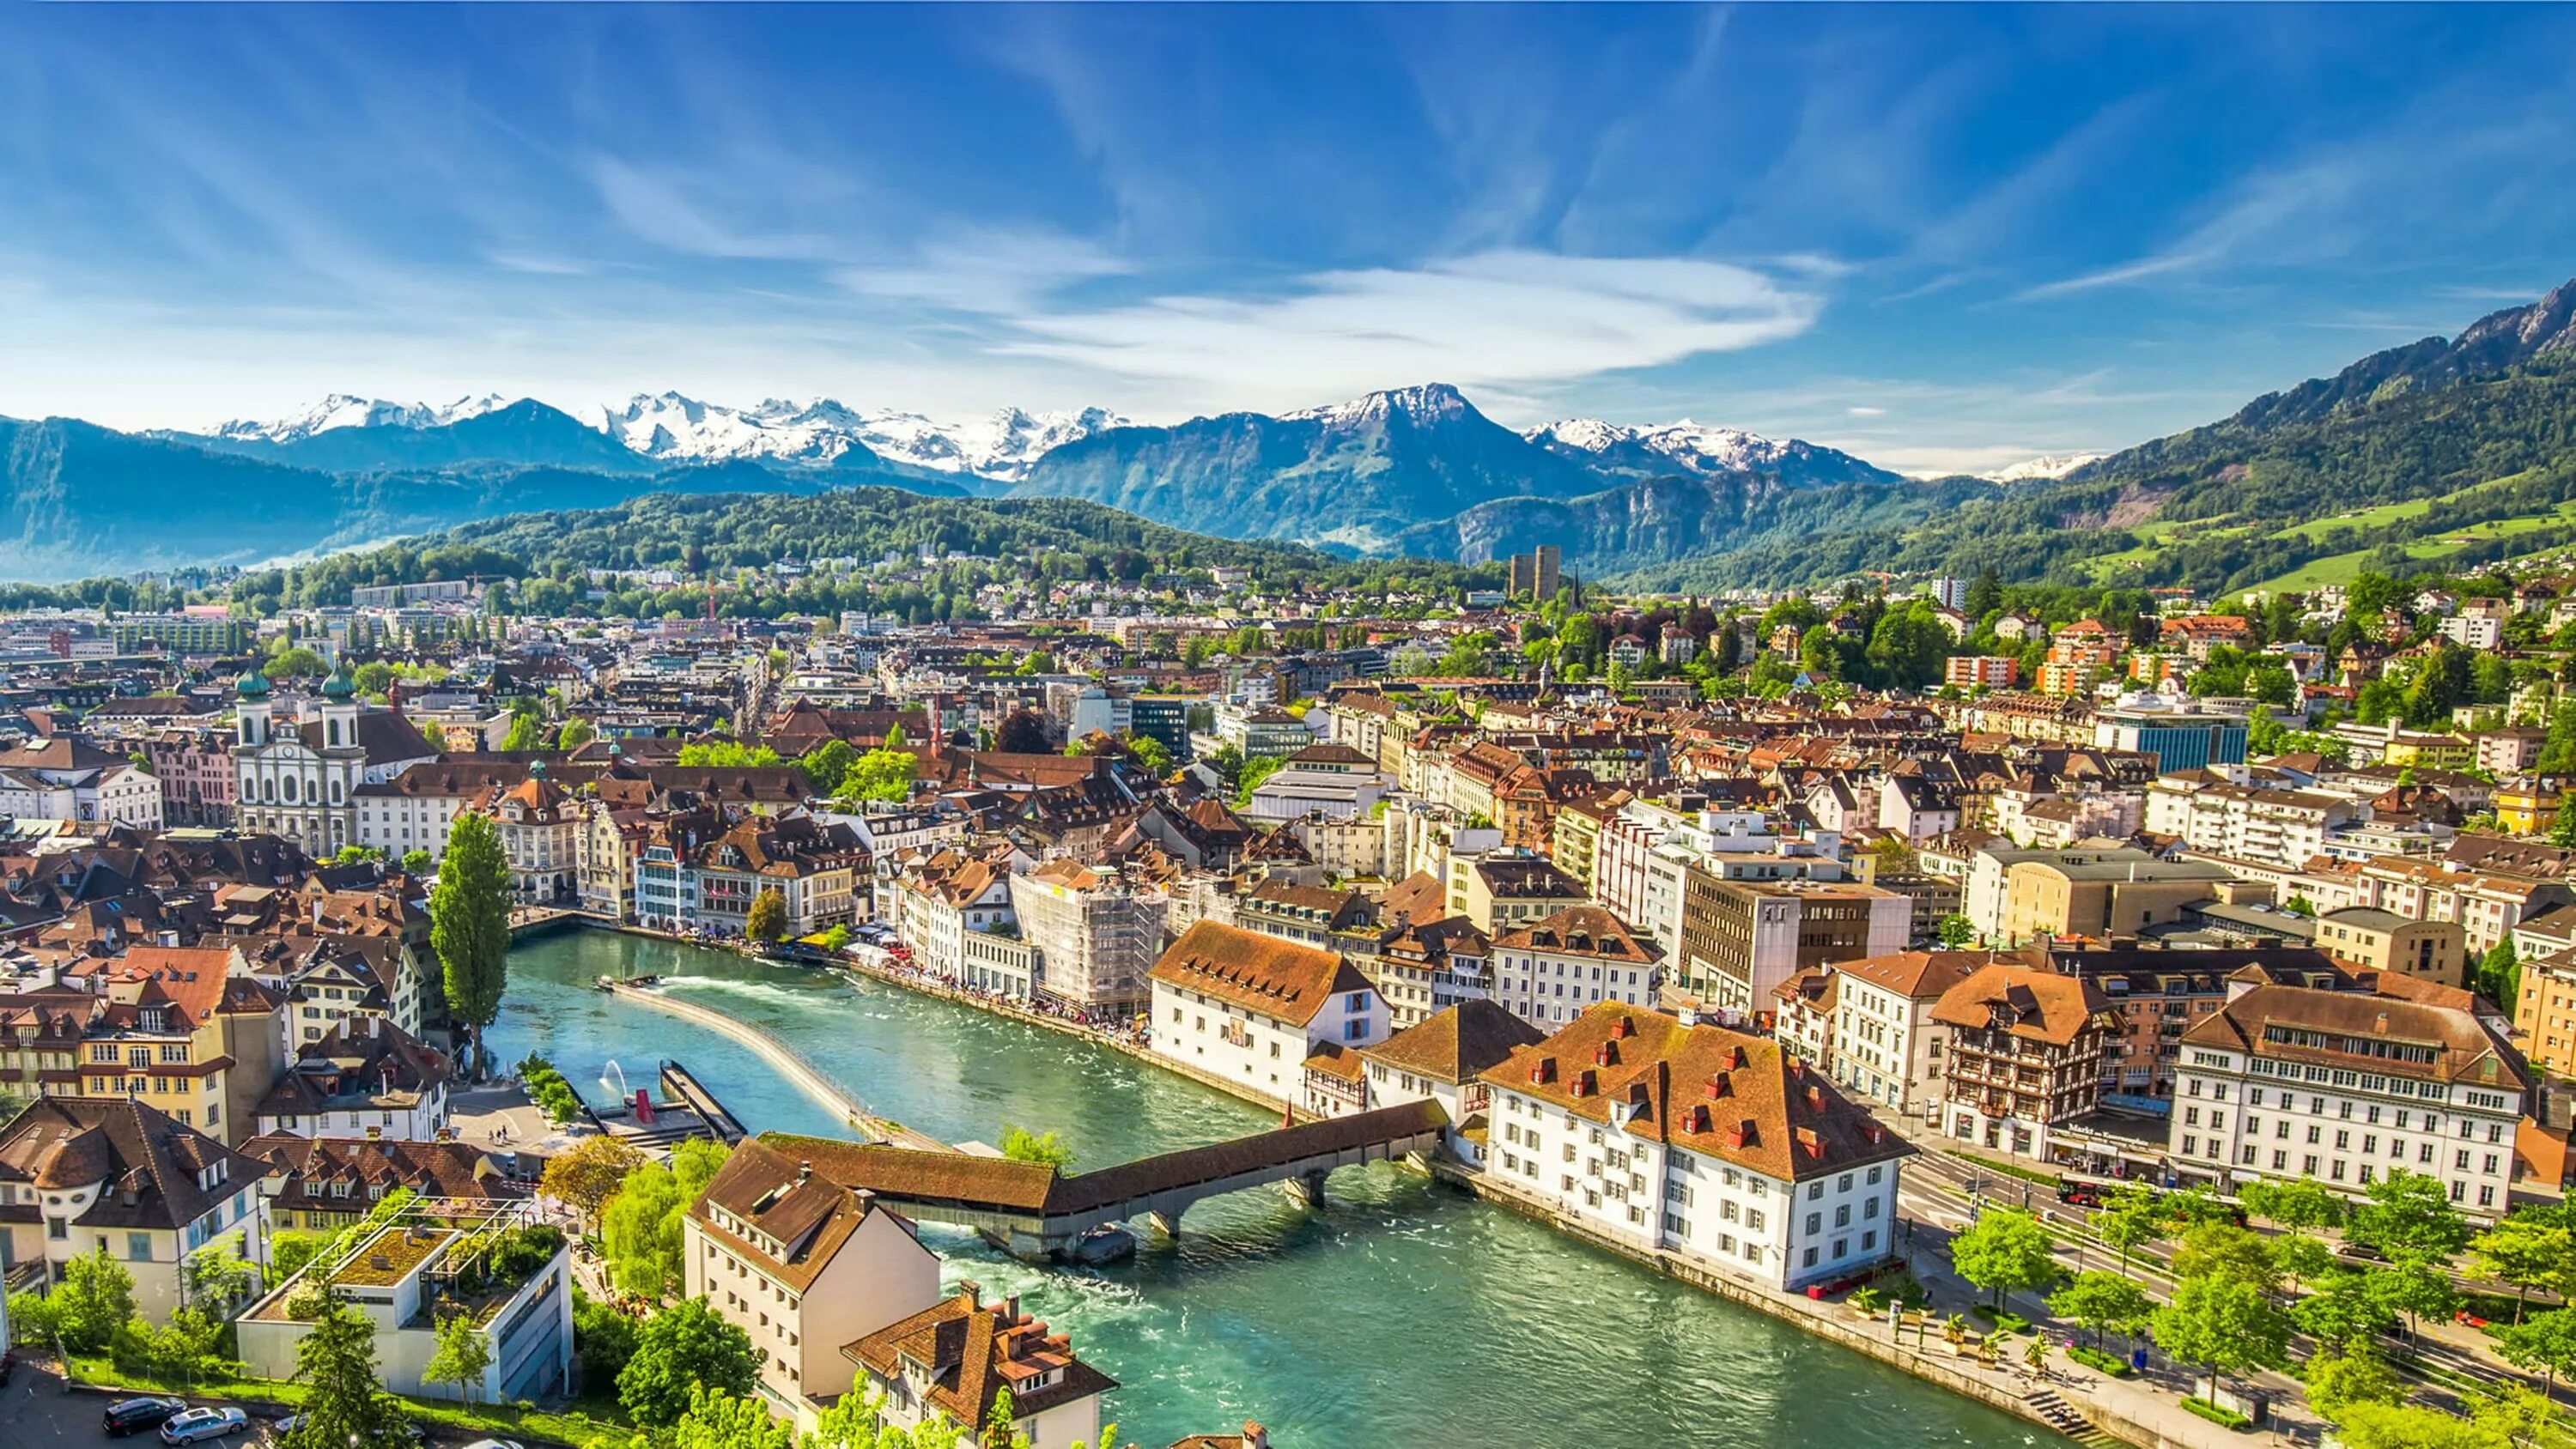 Город в австрии 4 буквы. Люцерн Швейцария. Люцерн город в Швейцарии. Швейцария Альпы Цюрих. Швейцария Берн горы.